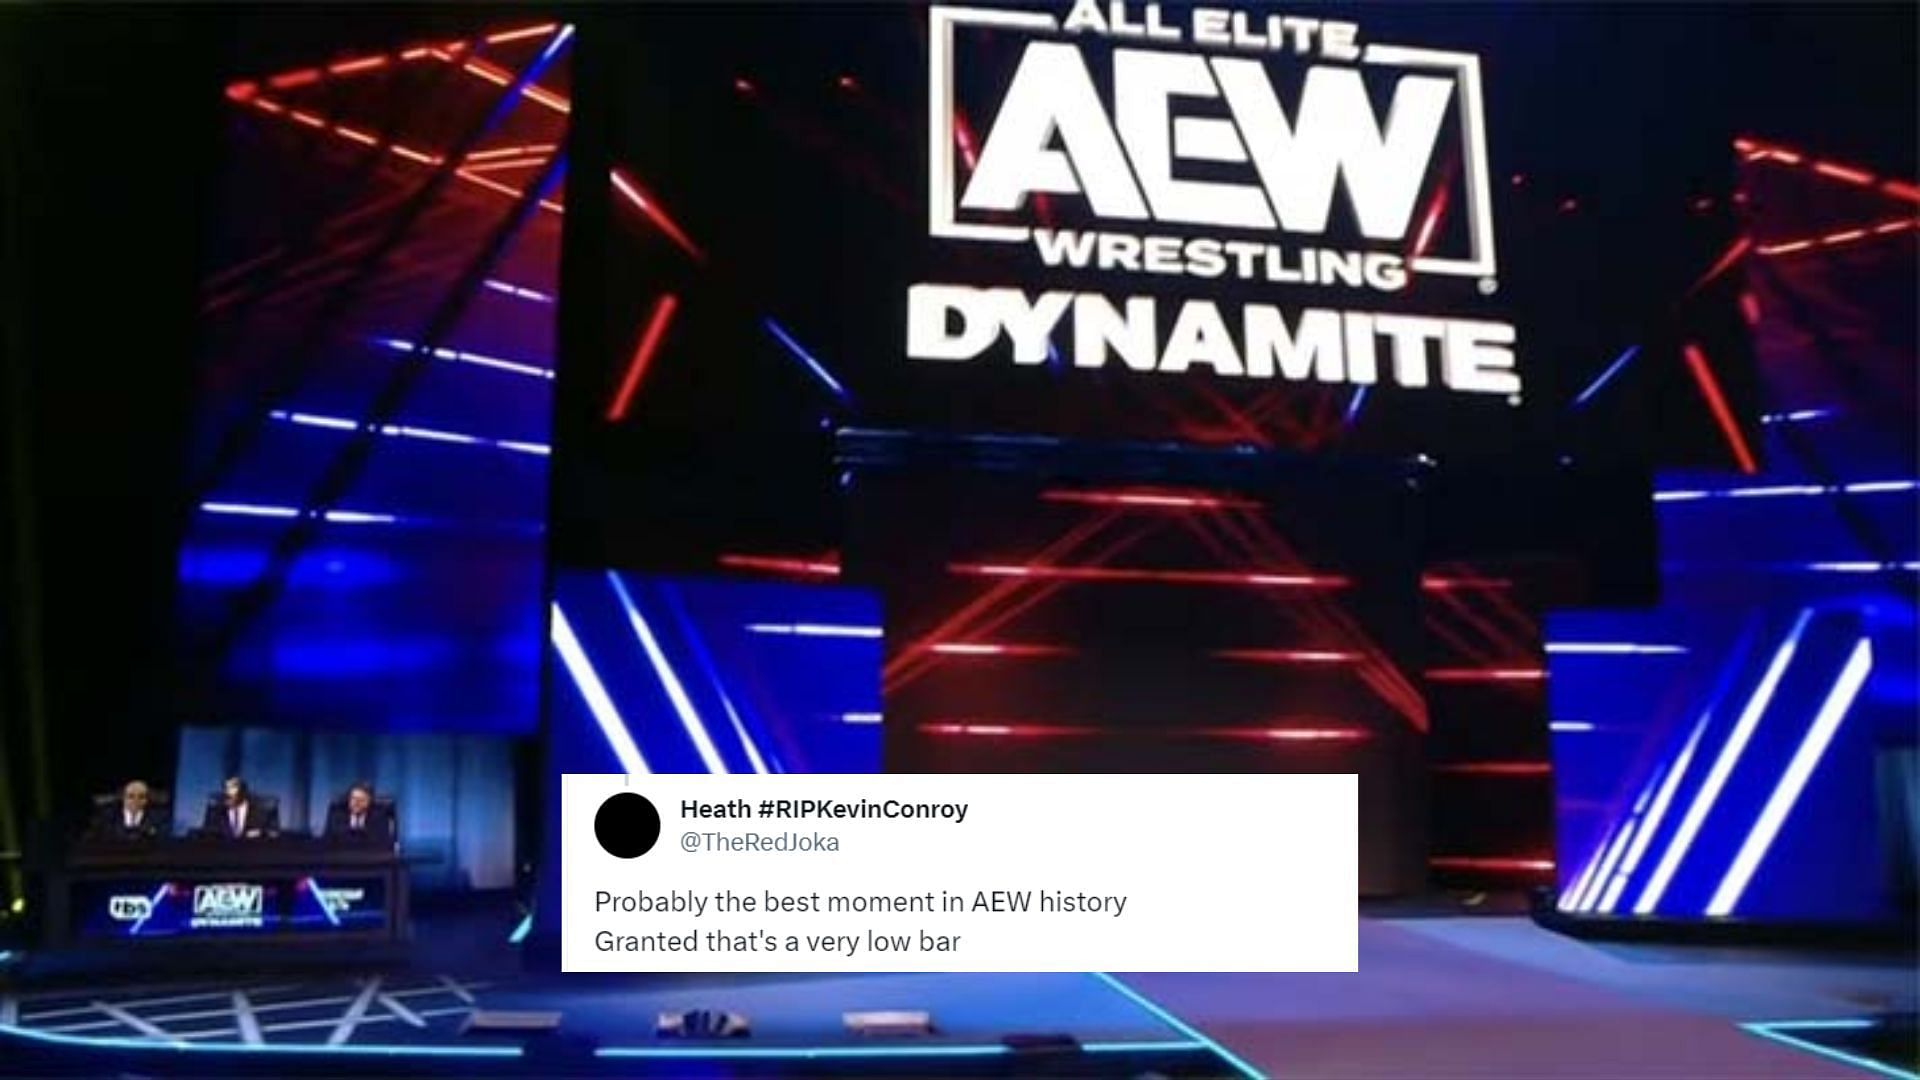 AEW Dynamite featured an insane spot this week